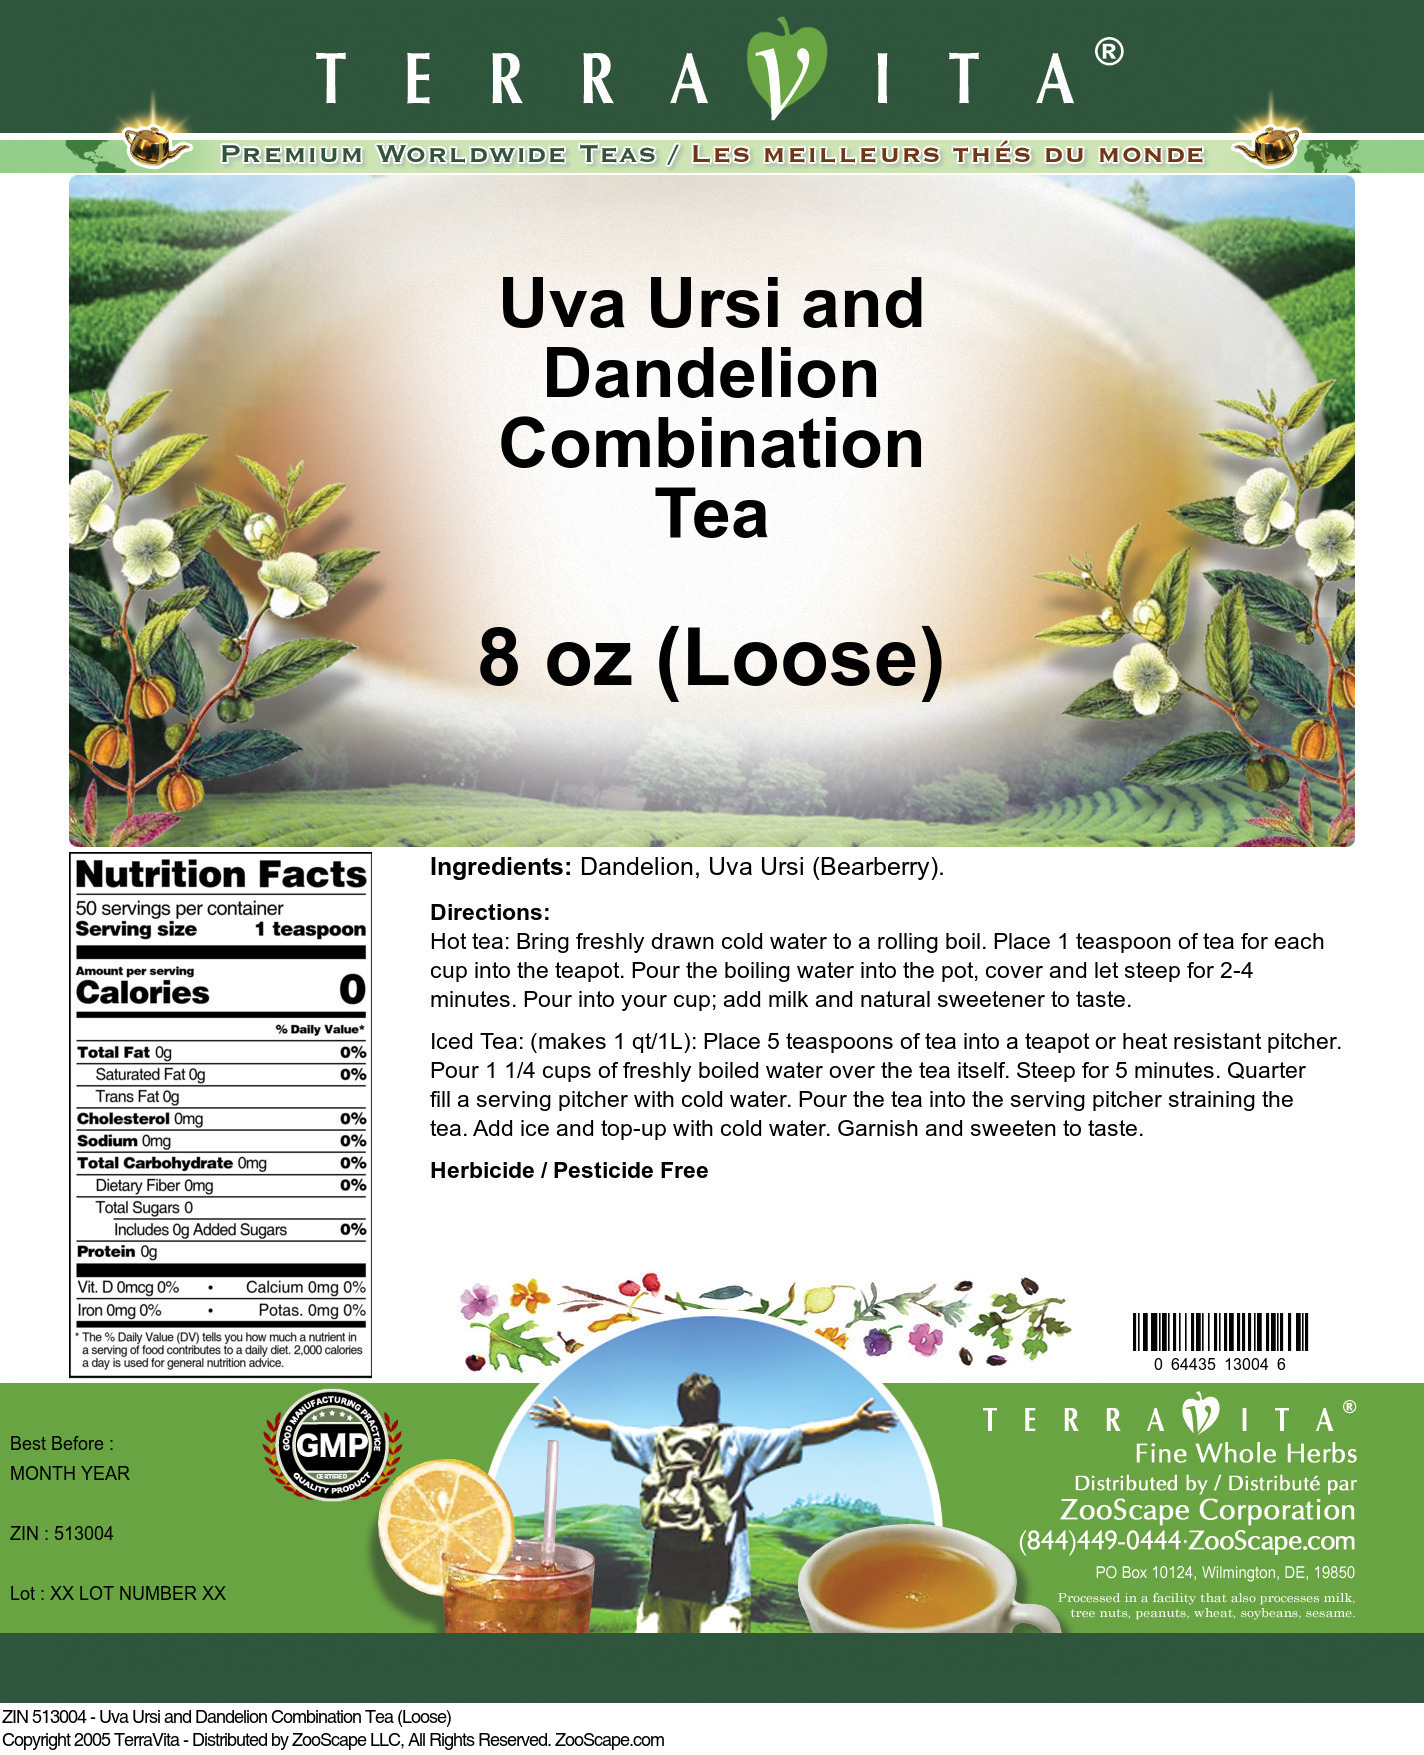 Uva Ursi and Dandelion Combination Tea (Loose) - Label